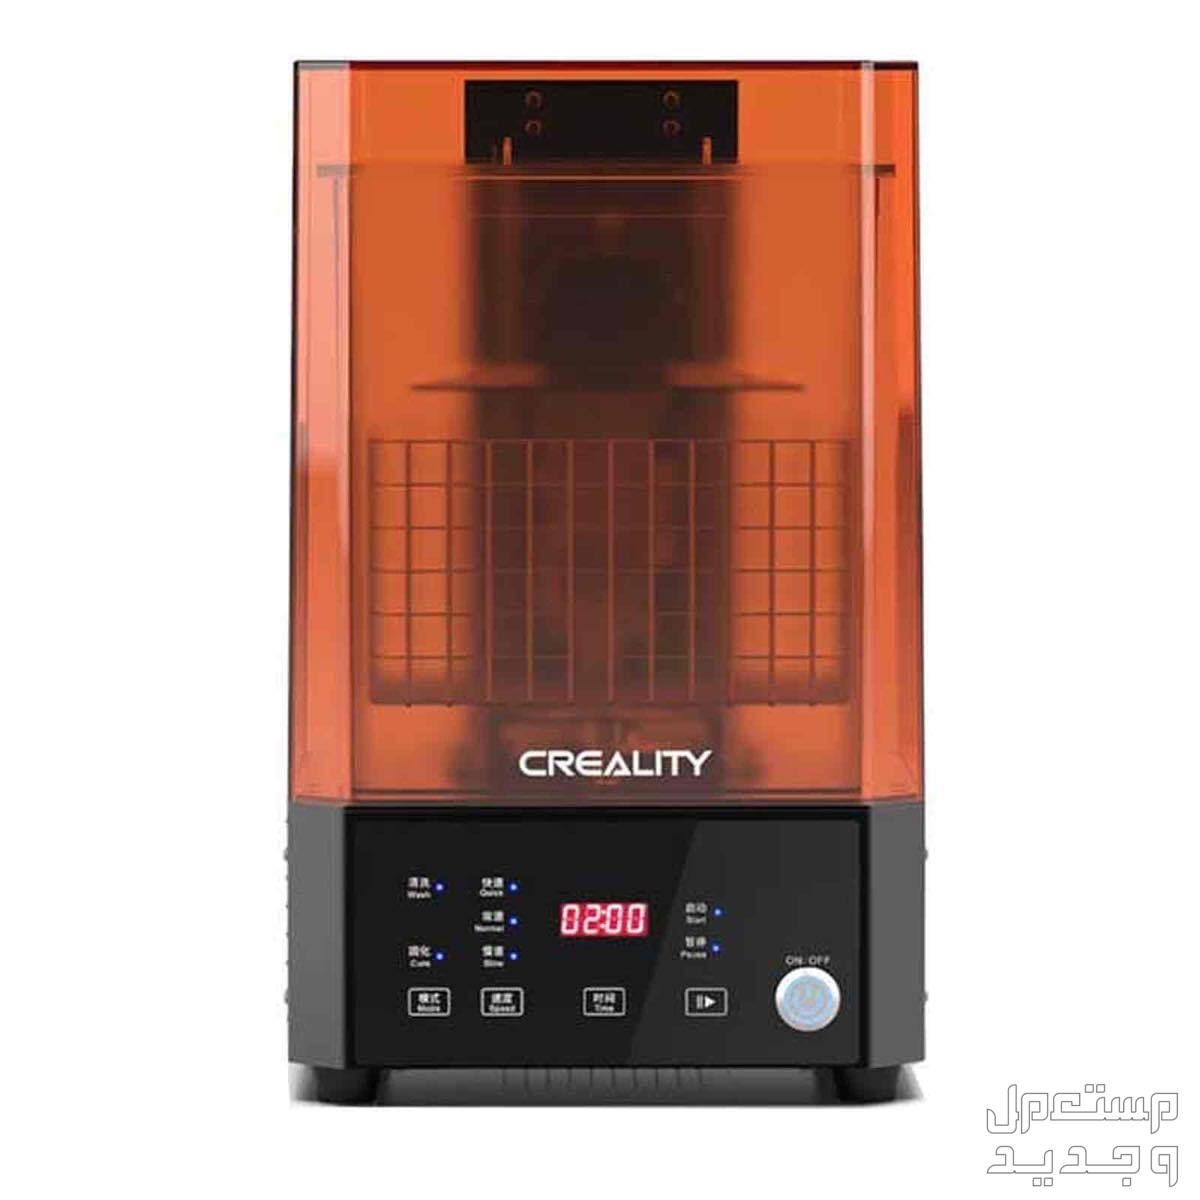 creality Halot 3D printer